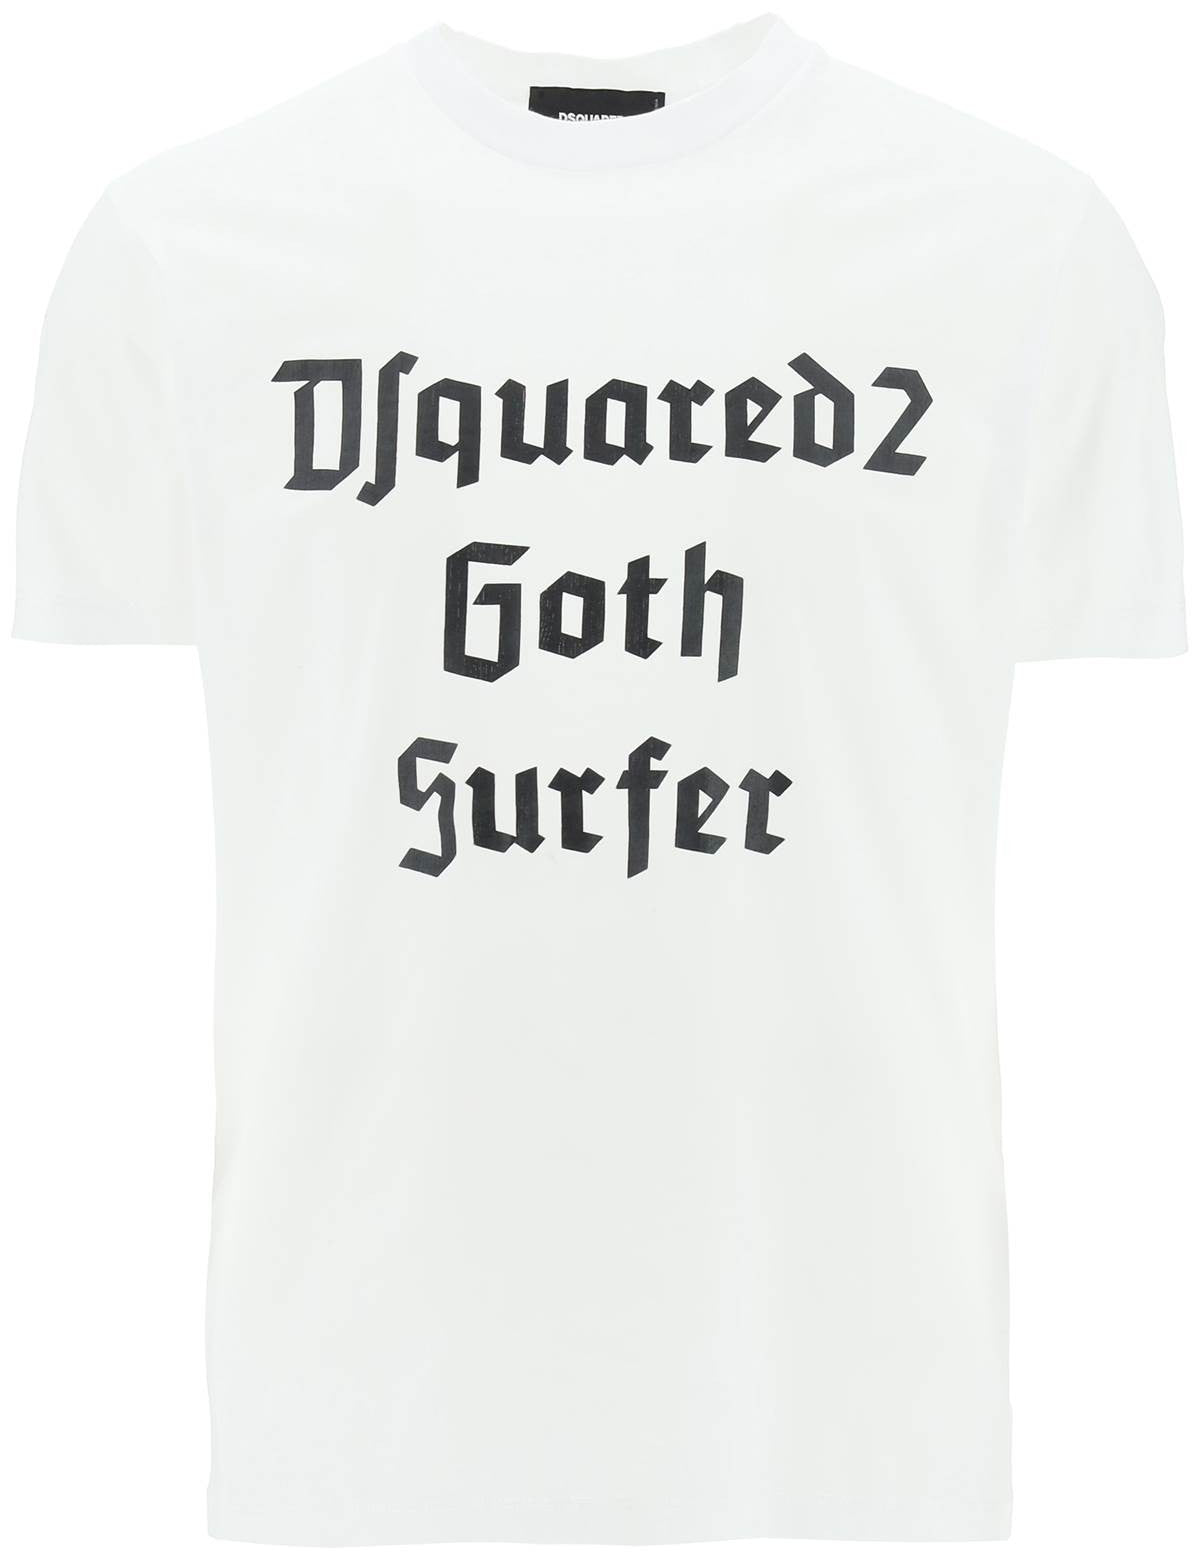 dsquared2-d2-goth-surfer-t-shirt_c77bf7f4-74a5-4404-8a78-dcce9e008970.jpg